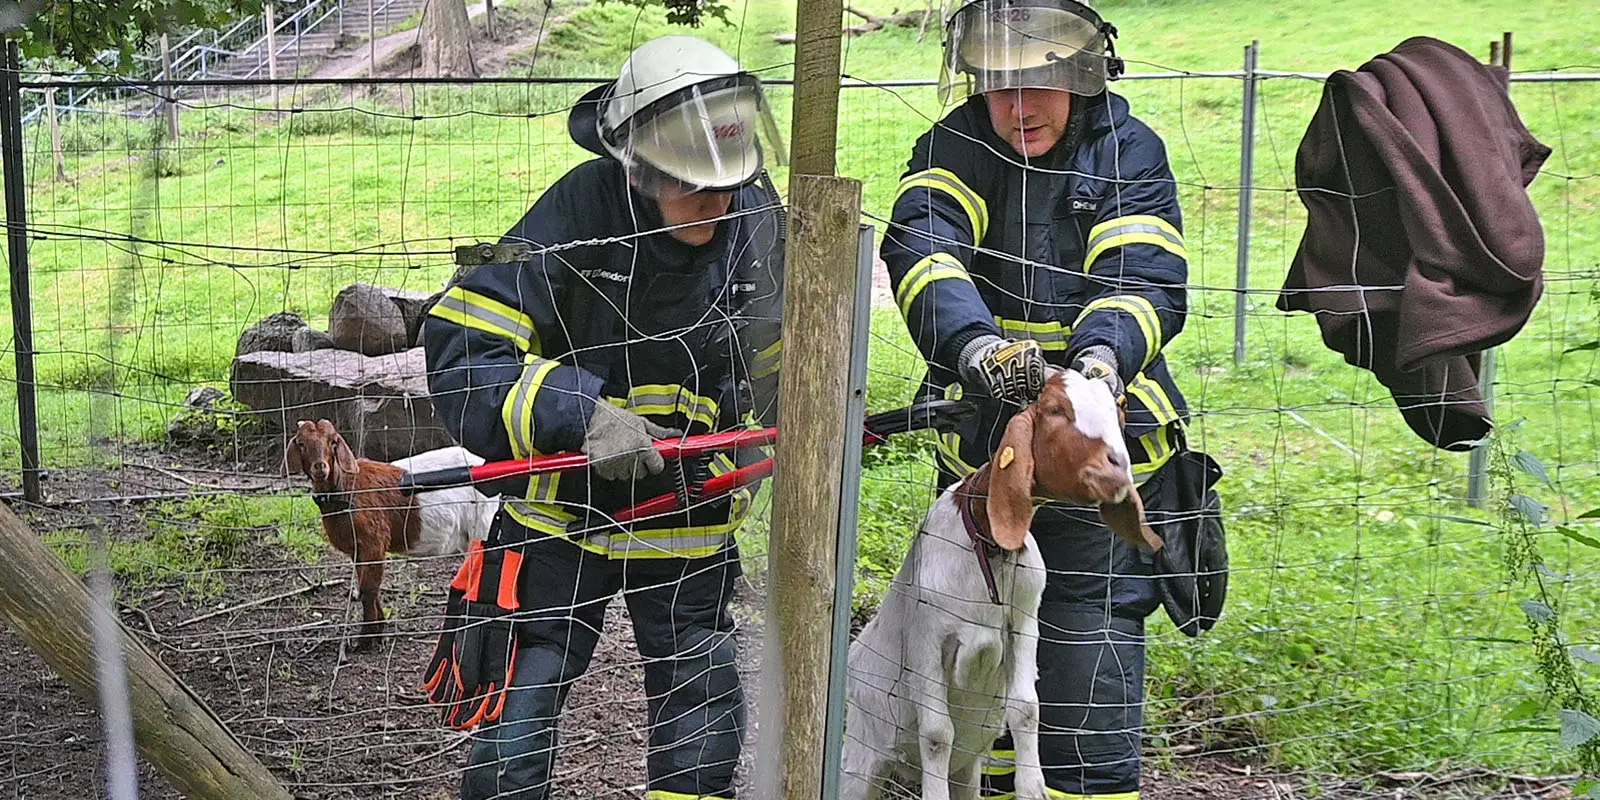 Feuerwehrmänner befreien die Ziege. Foto: Lenthe-Medien